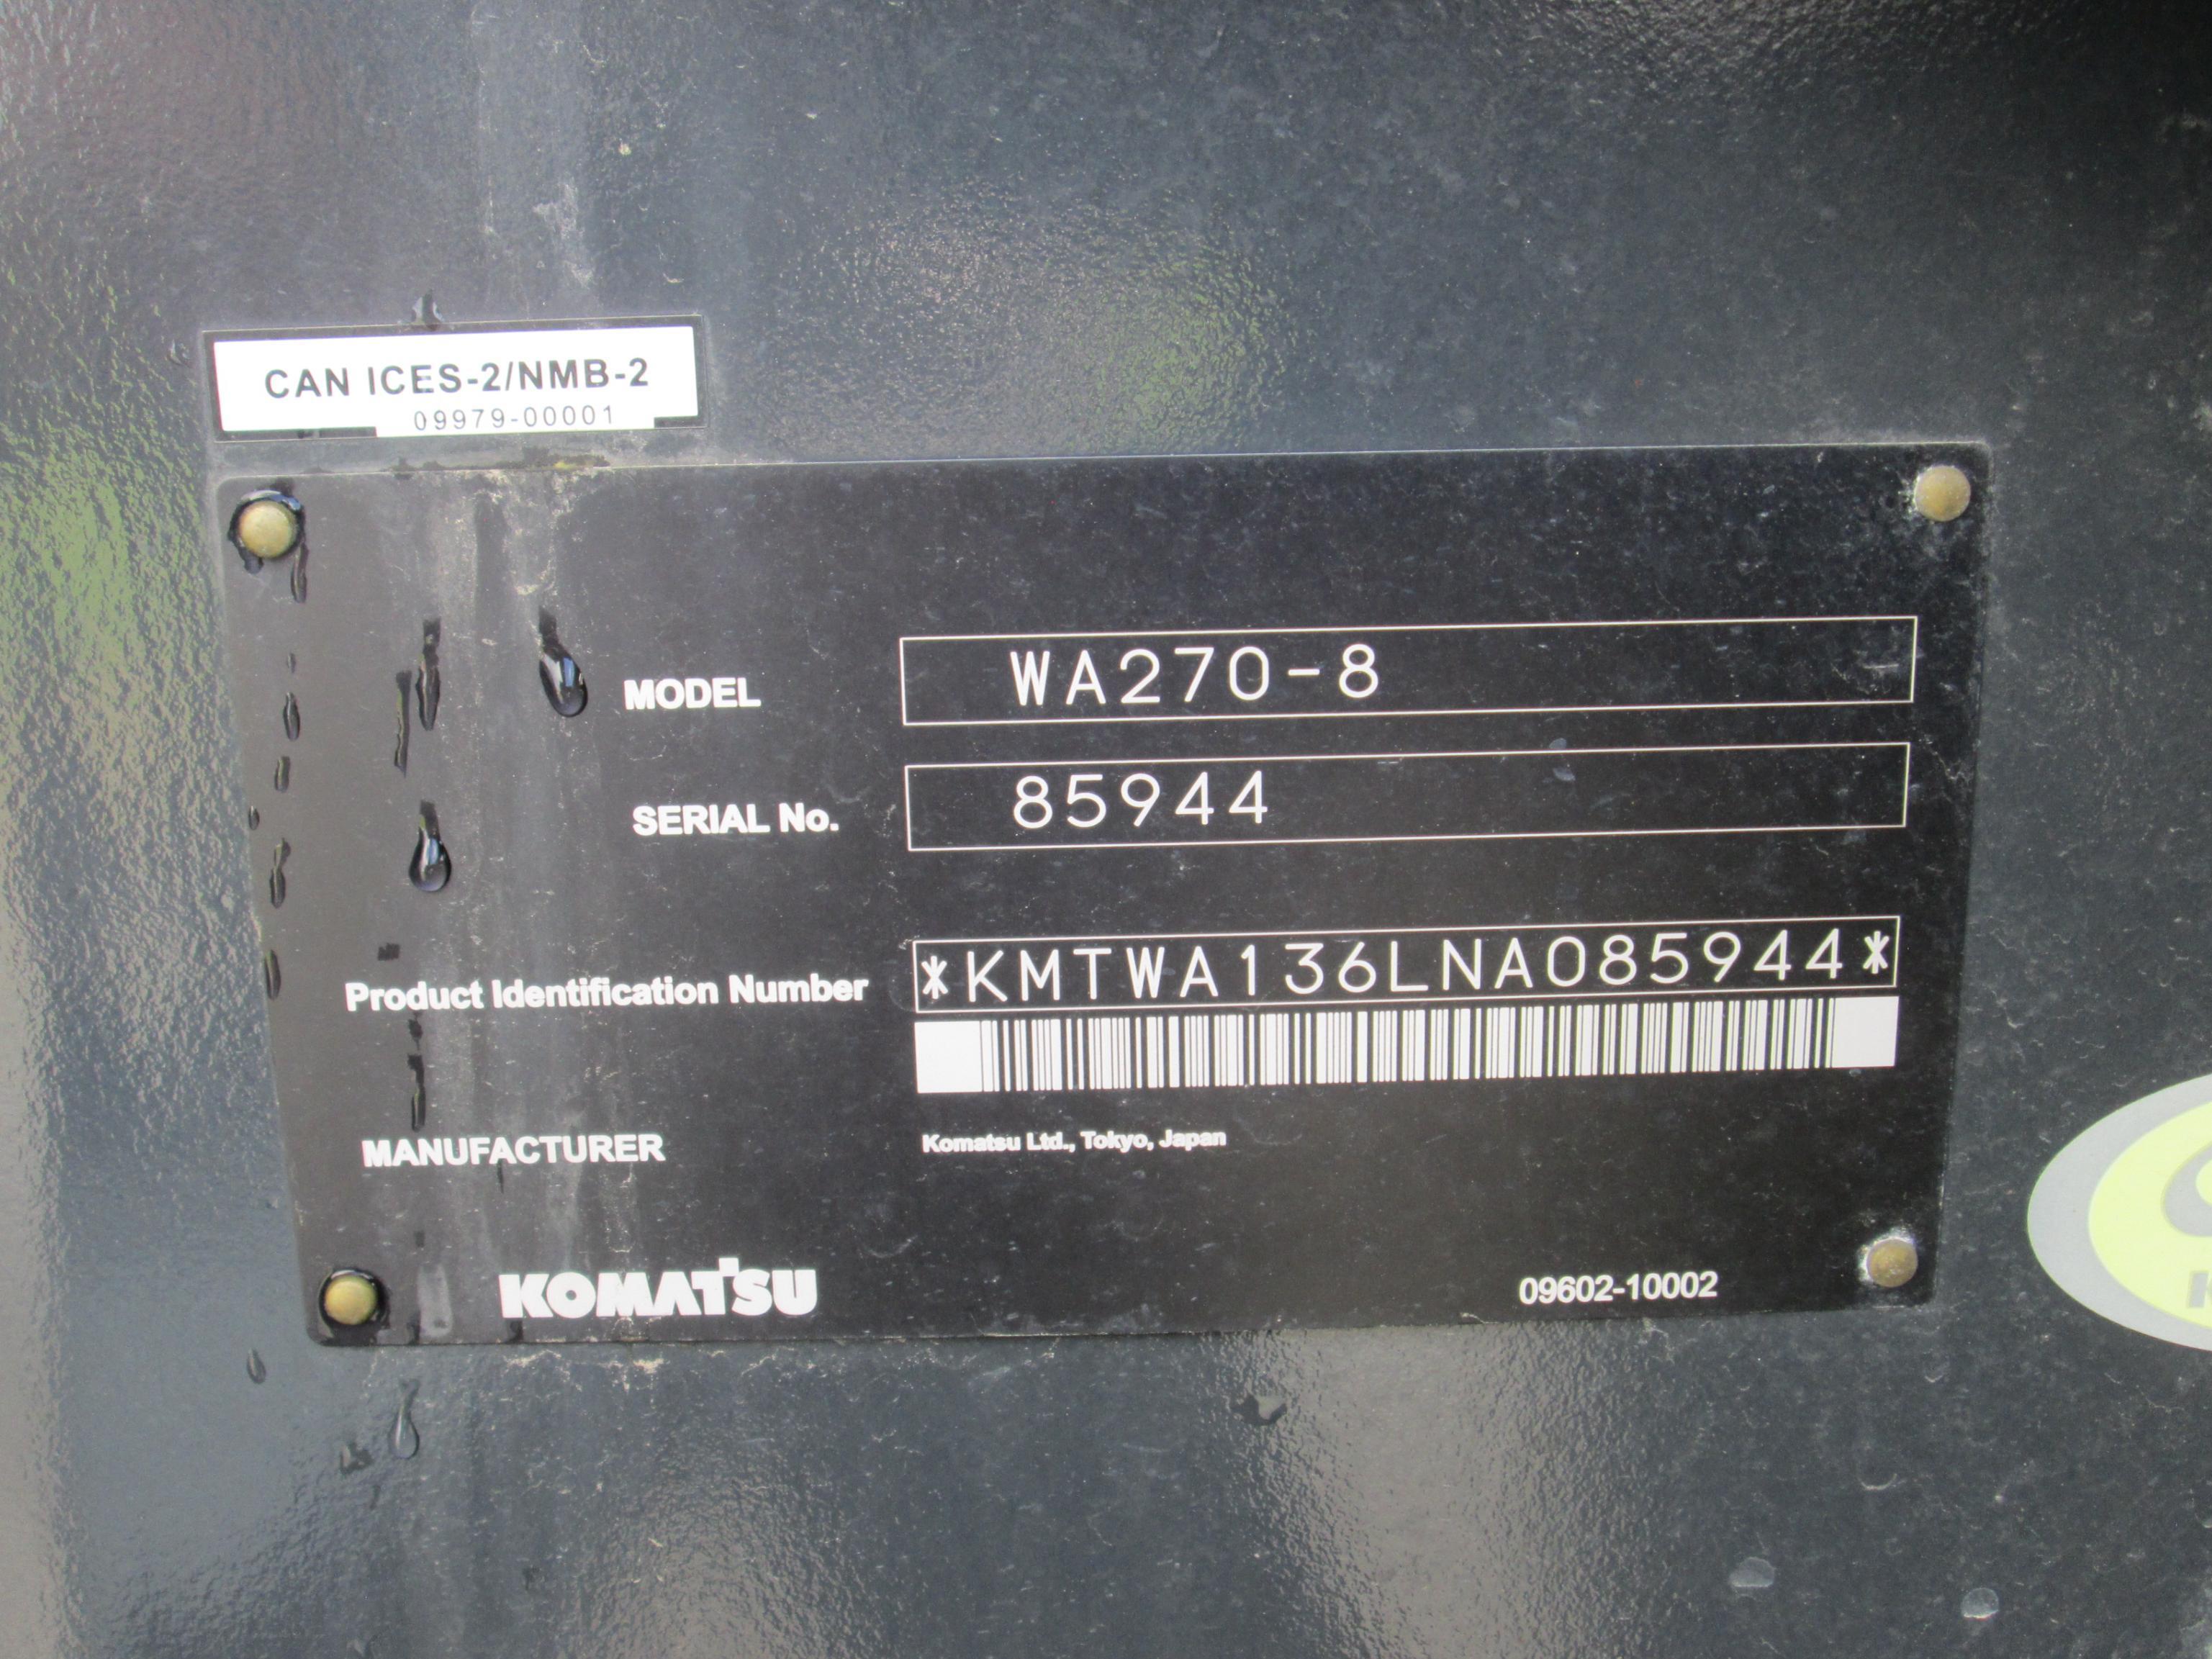 RUBBER TIRED LOADER 2023 Komatsu WA270-8 Wheel Loader SN 85944 powered by Komatsu diesel TIER-4